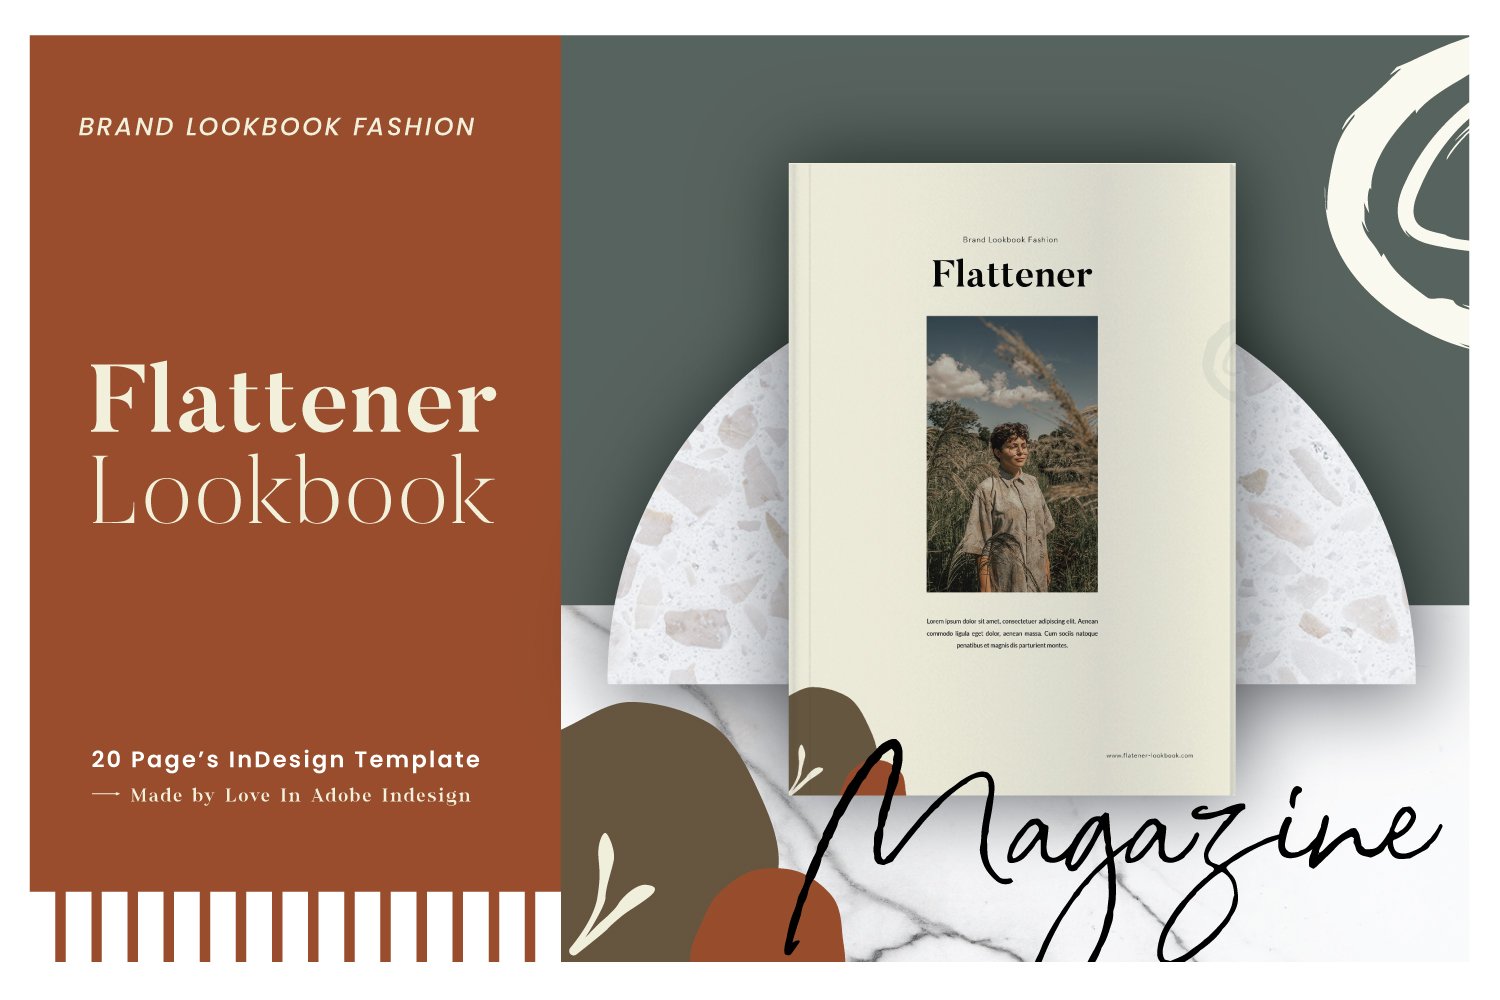 Flattener Lookbook Magazine